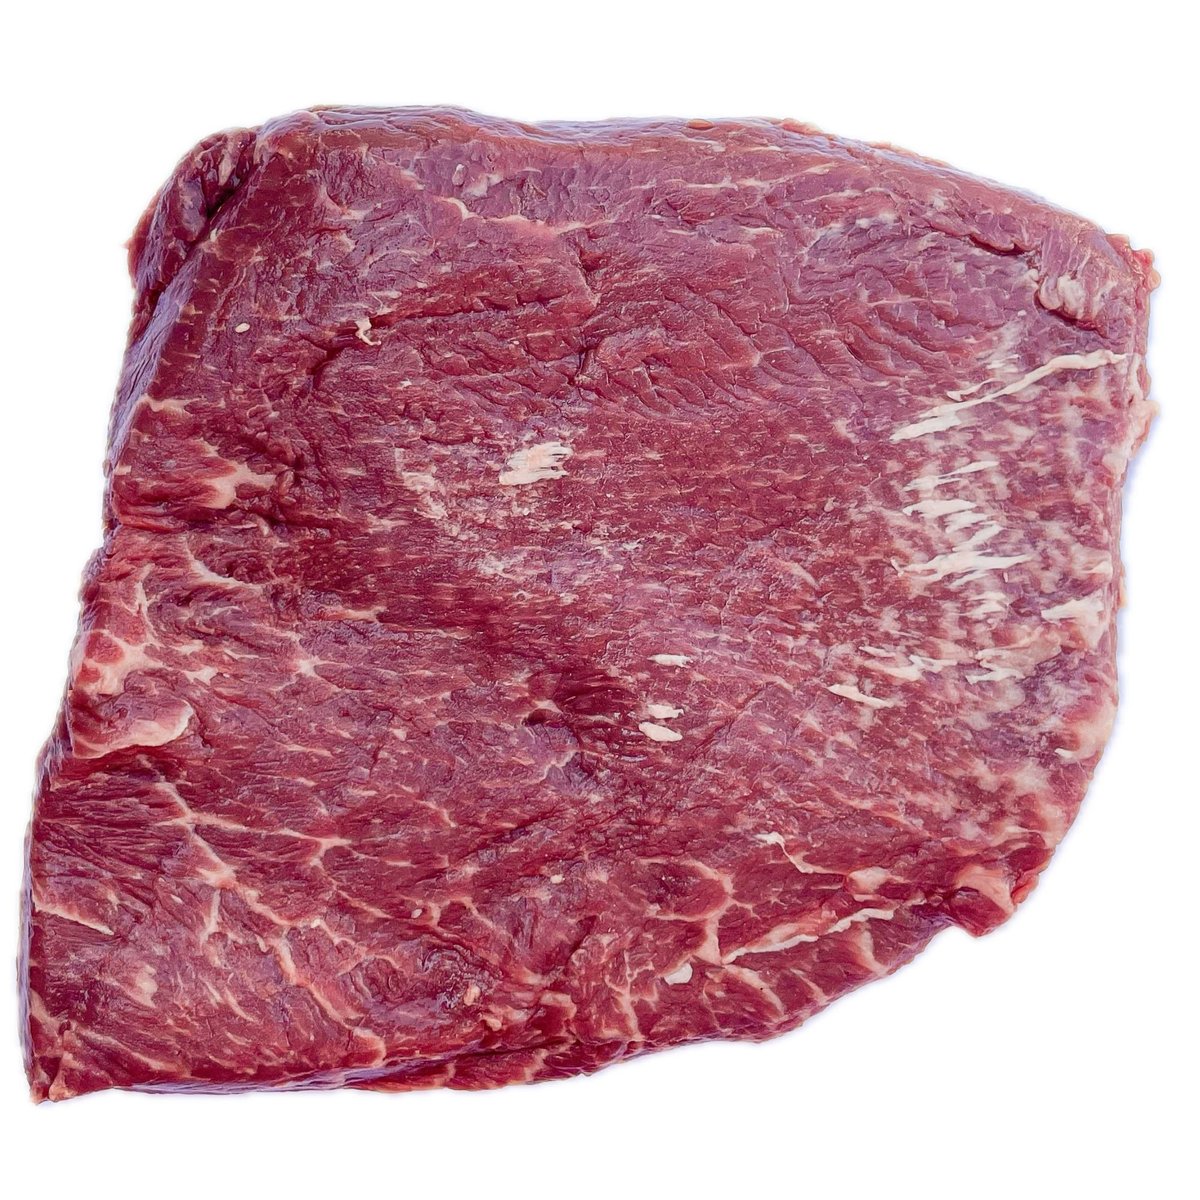 Sutcha Prime Flat Iron steak z Irska grass fed